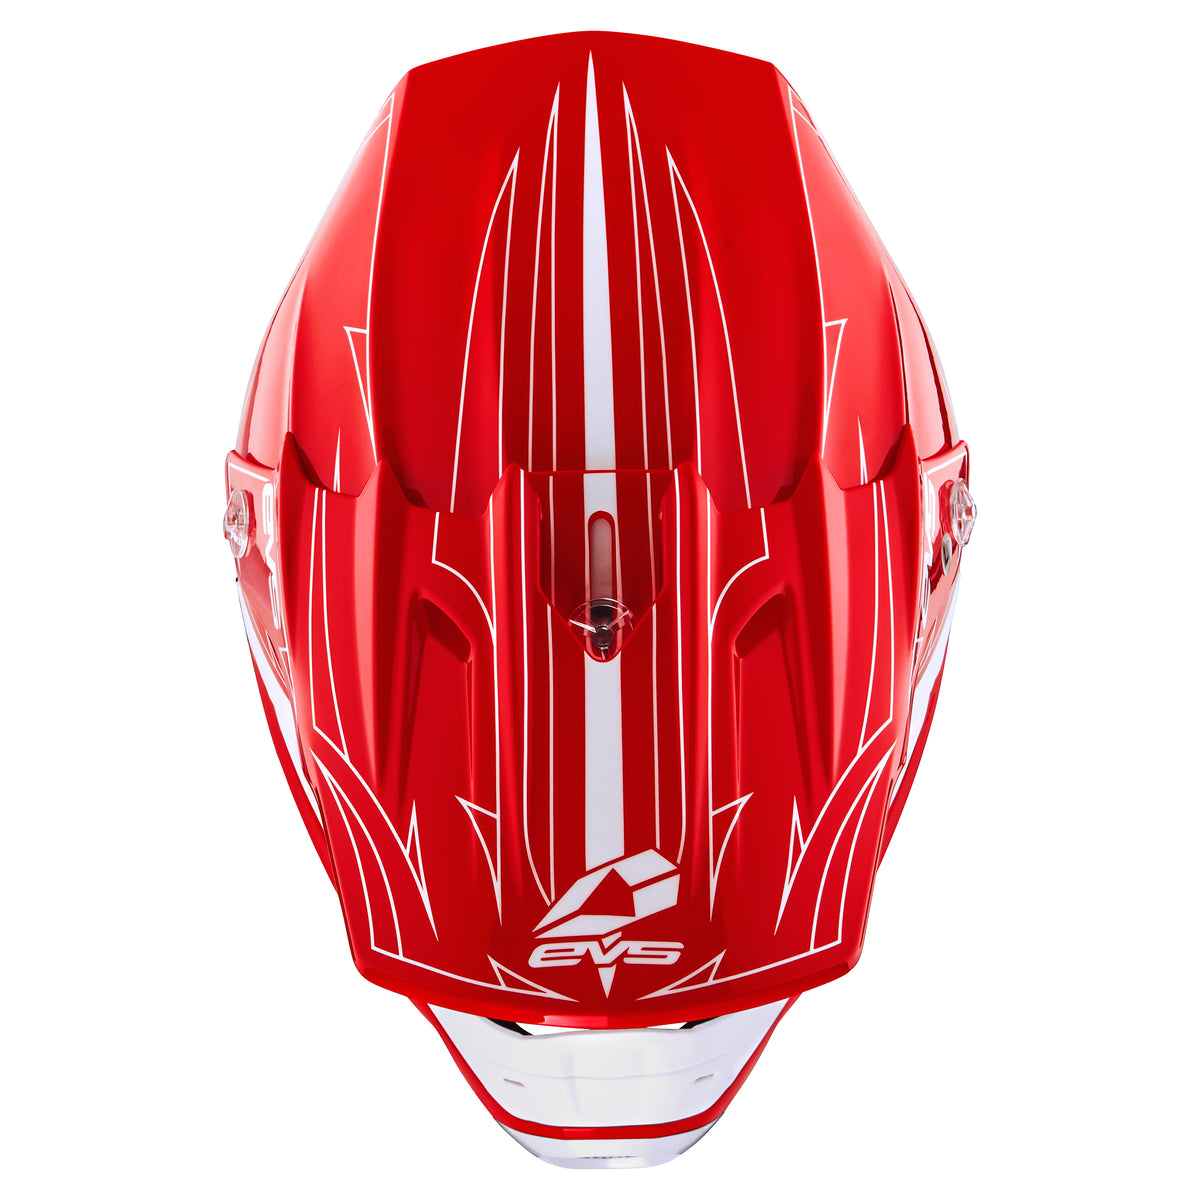 T5 Helmet - Pinner Red - EVS Sports